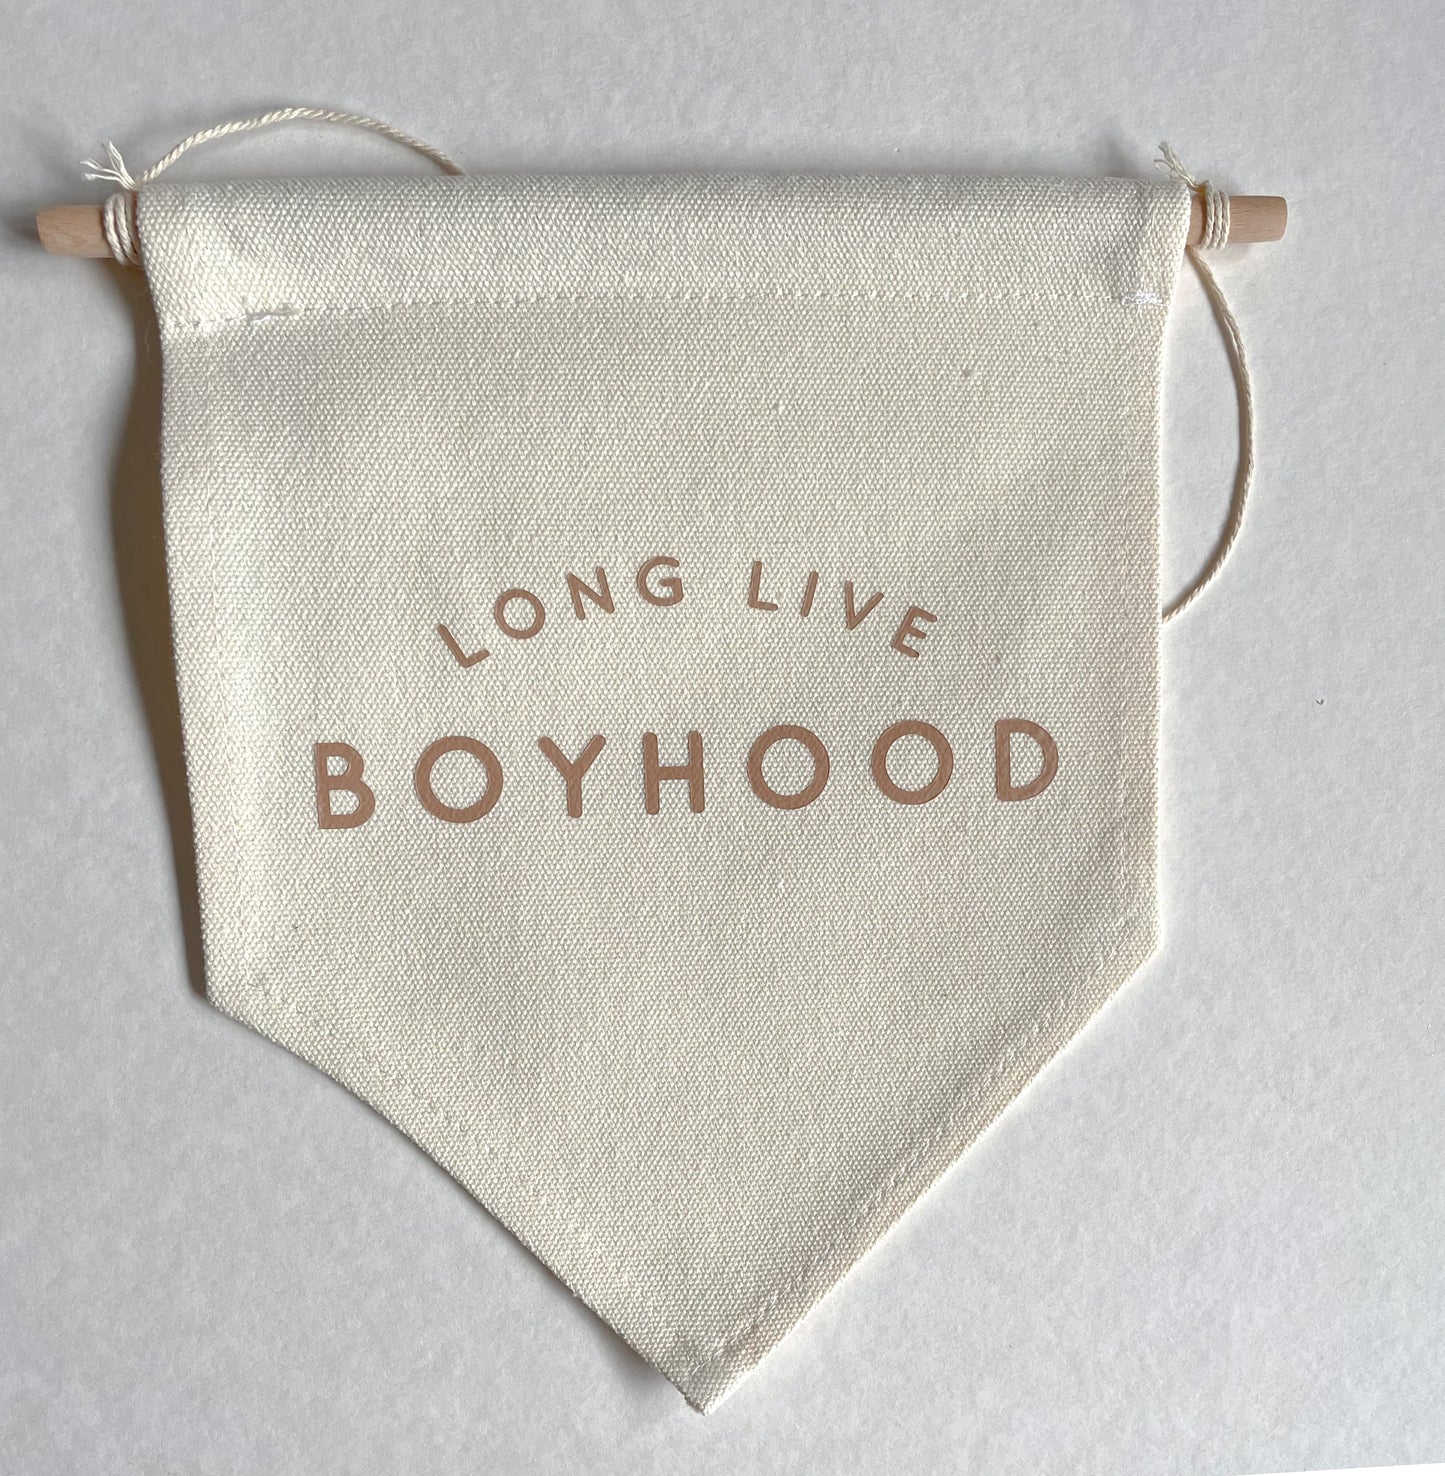 Long live boyhood caramel Banner READY TO SHIP SALE